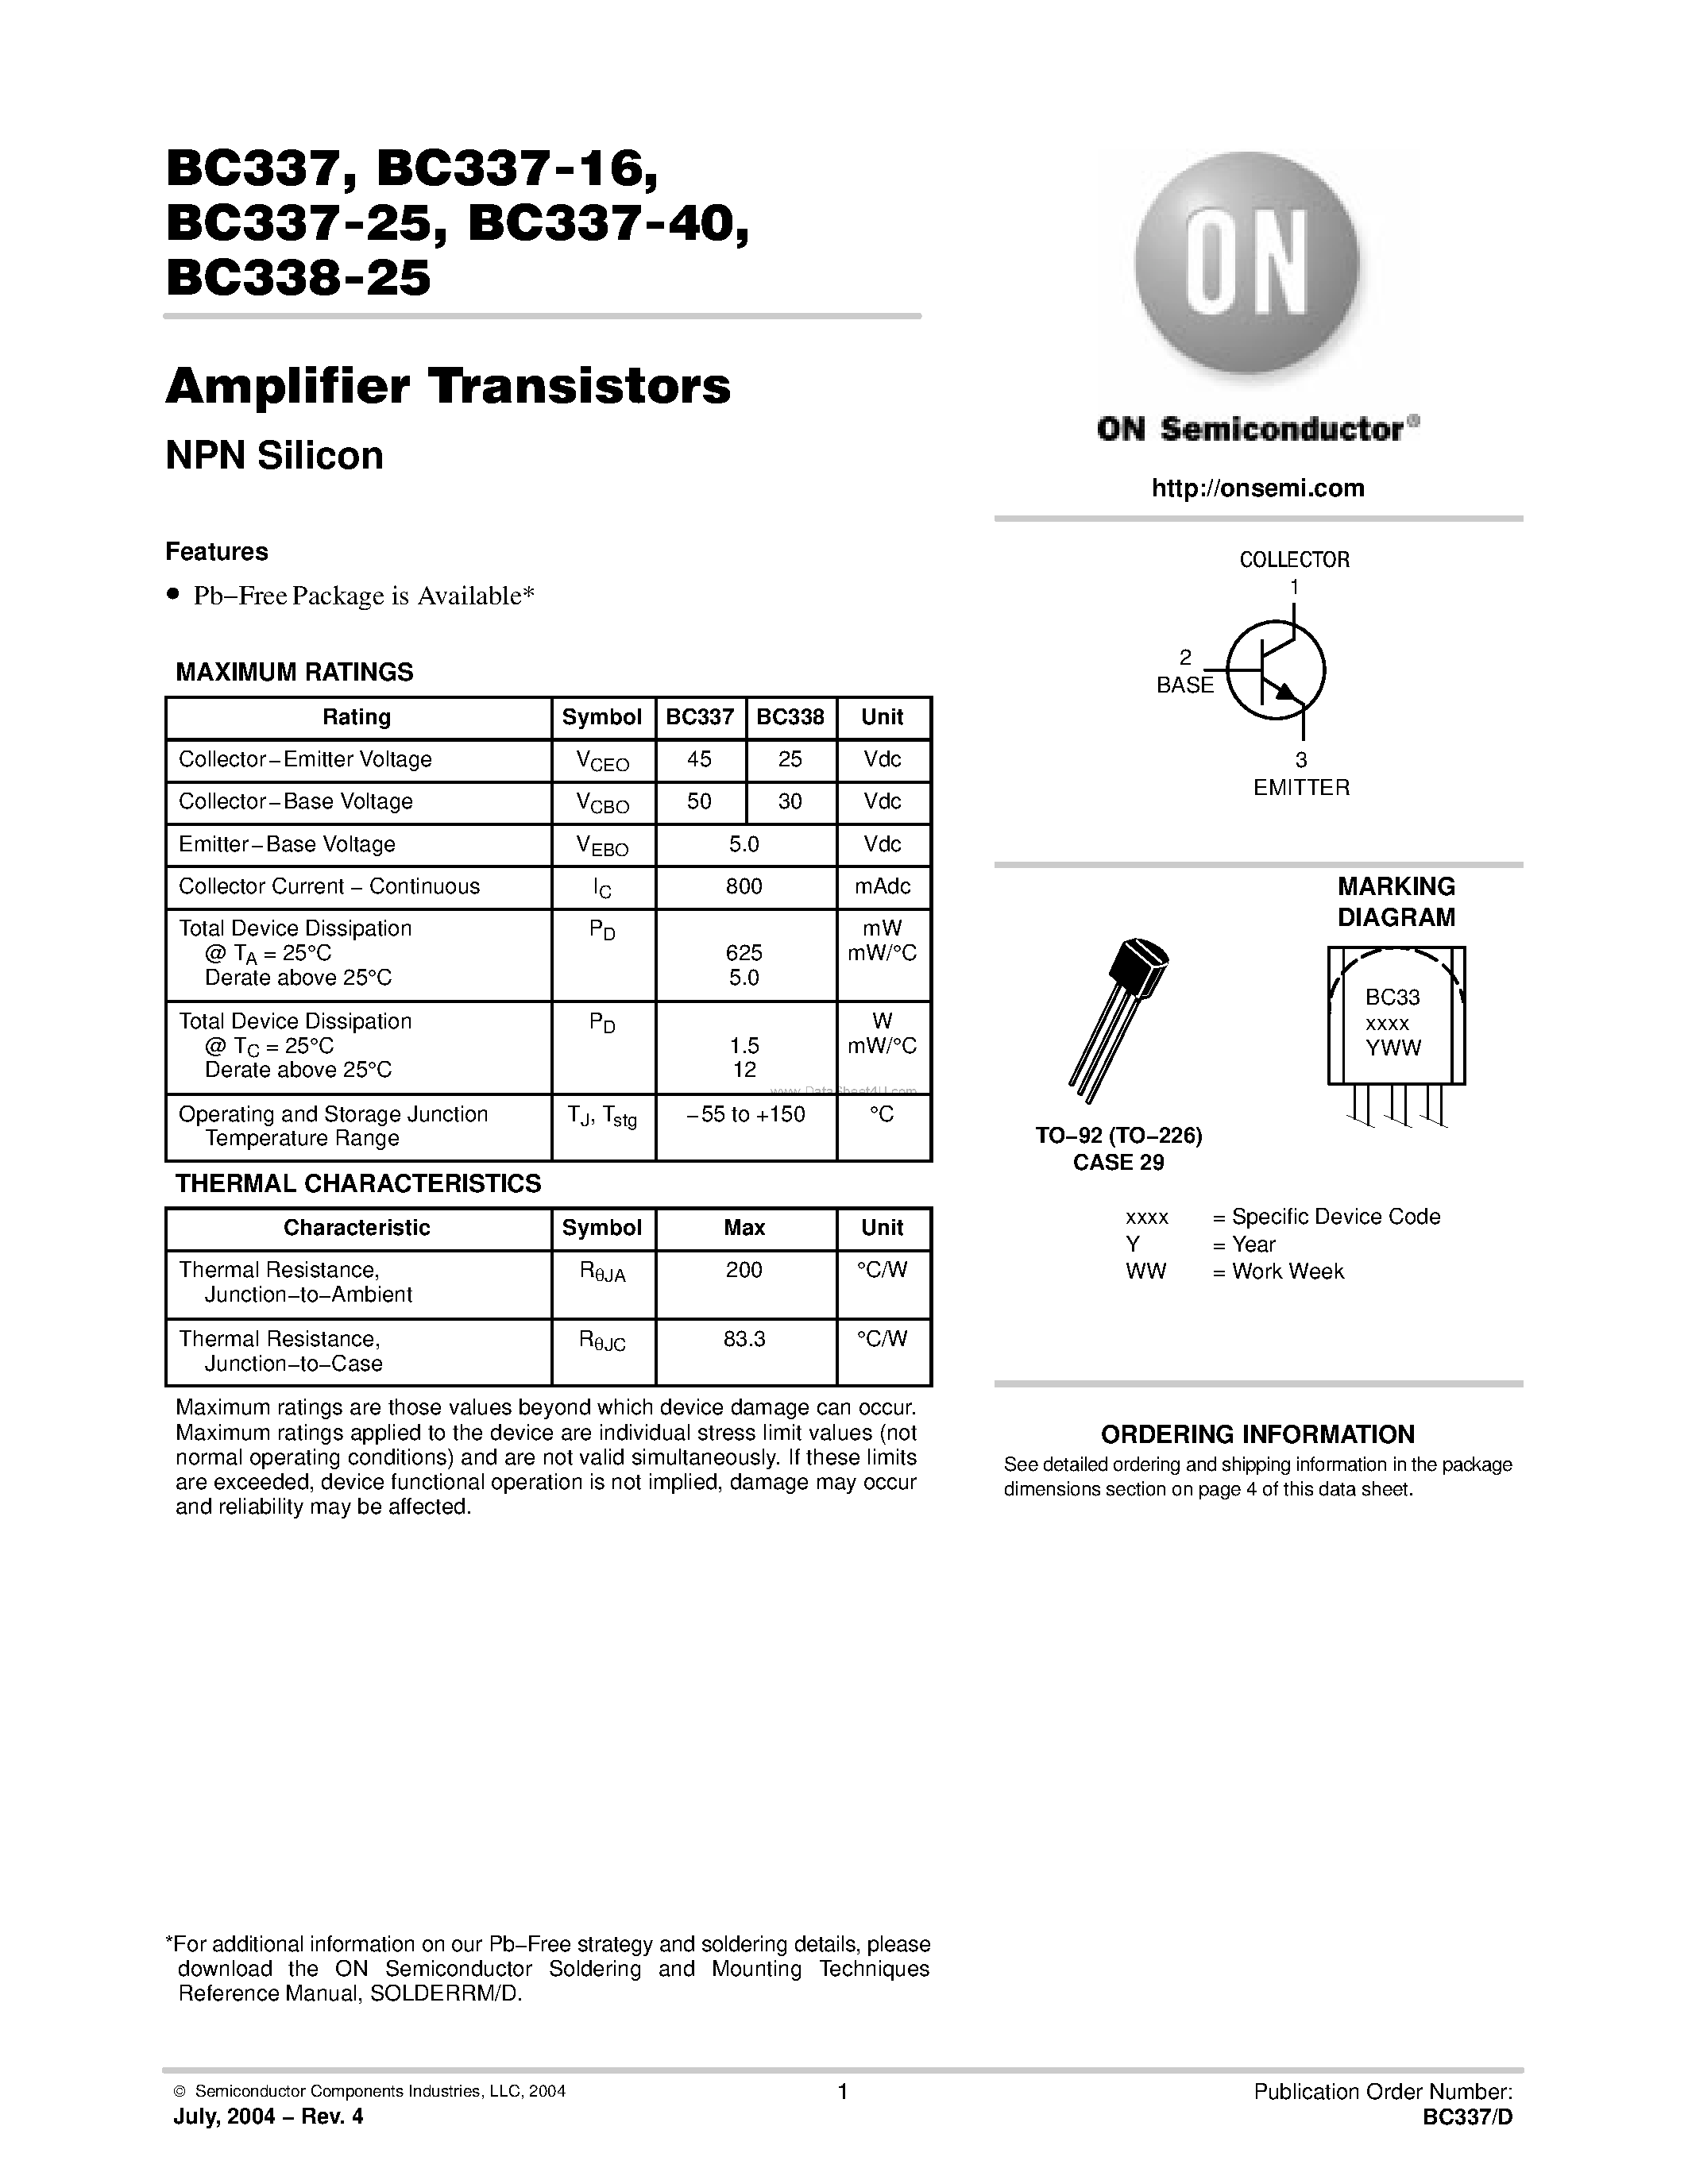 Datasheet BC338-25 - Amplifier Transistors(NPN Silicon) page 1